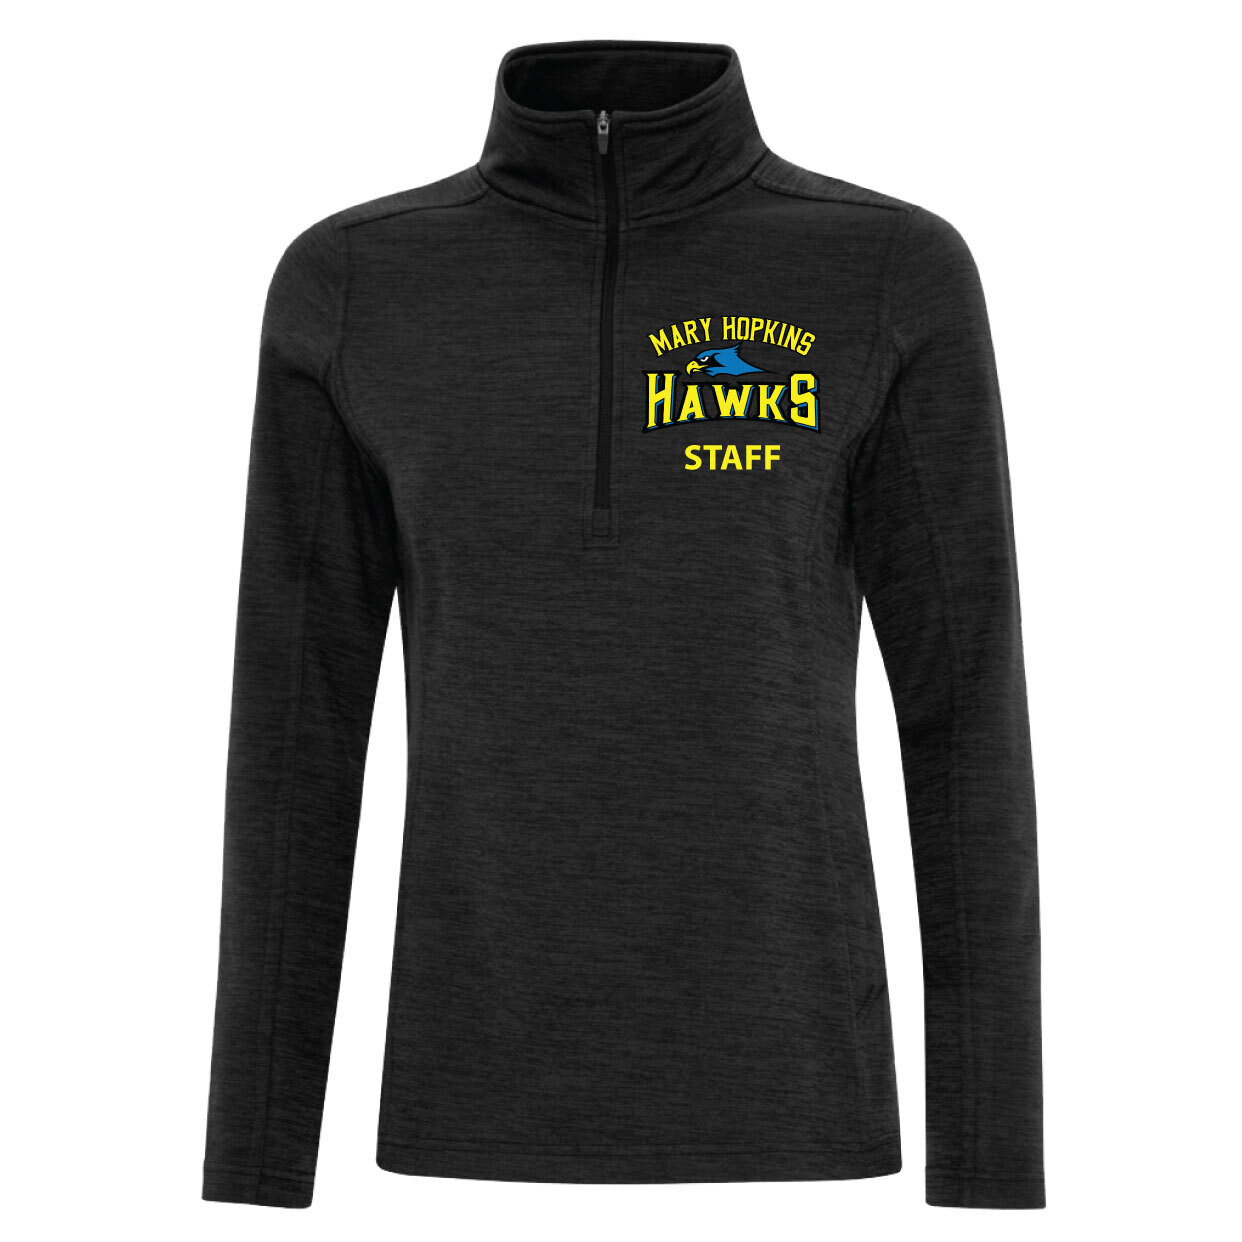 Mary Hopkins Hawks Staff - Ladies 1/2 Zip Sweatshirt